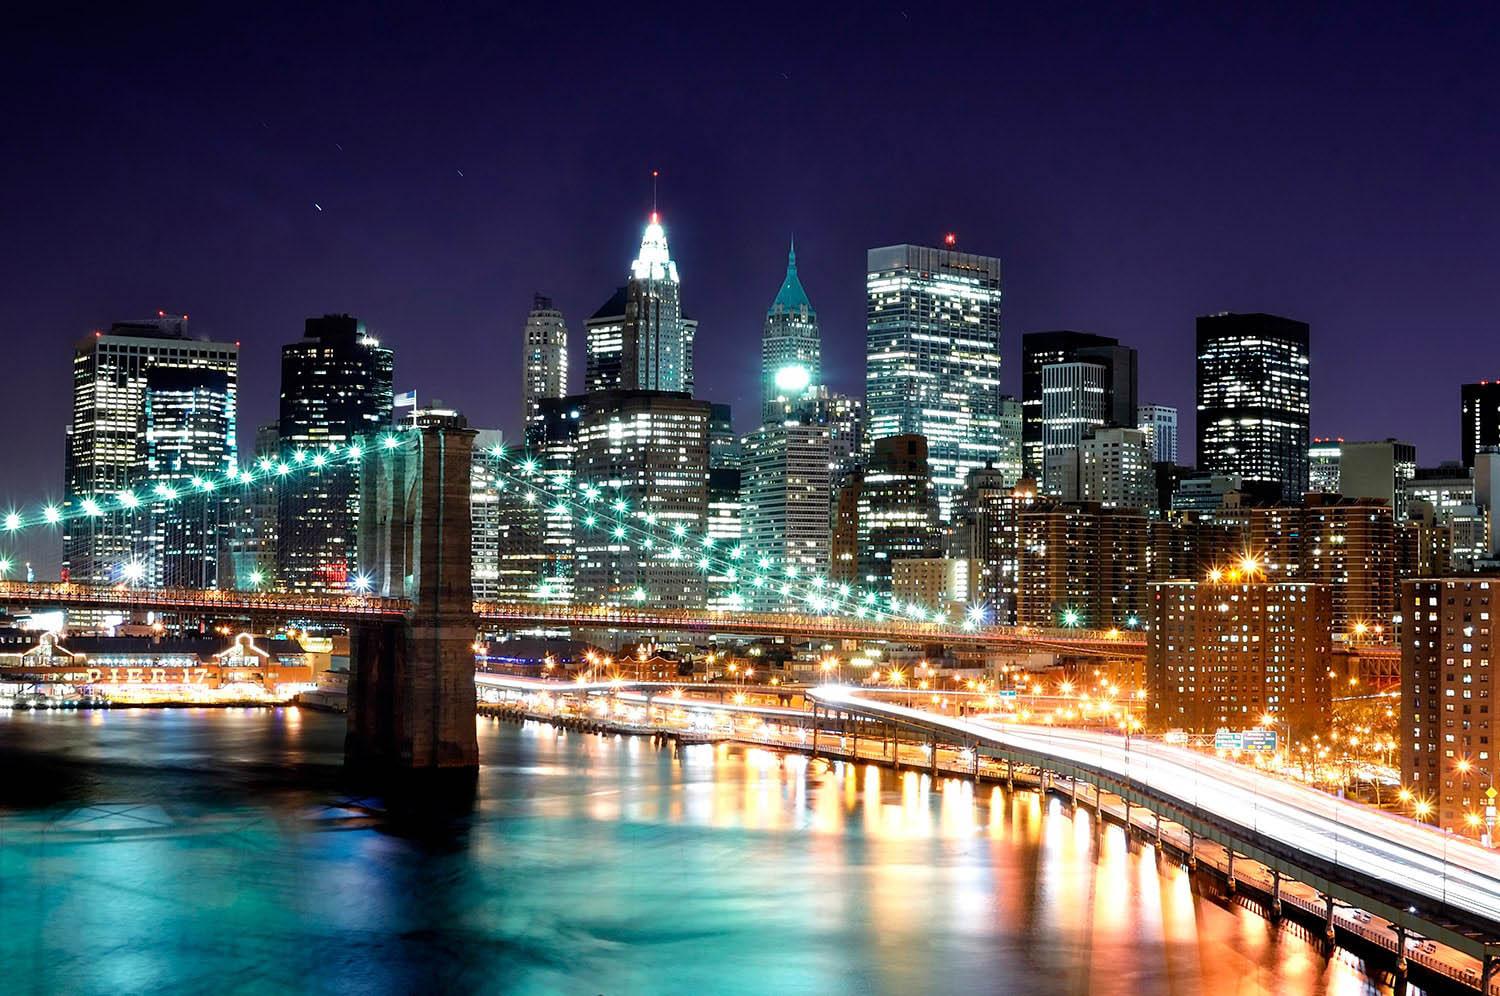 New York City building at night